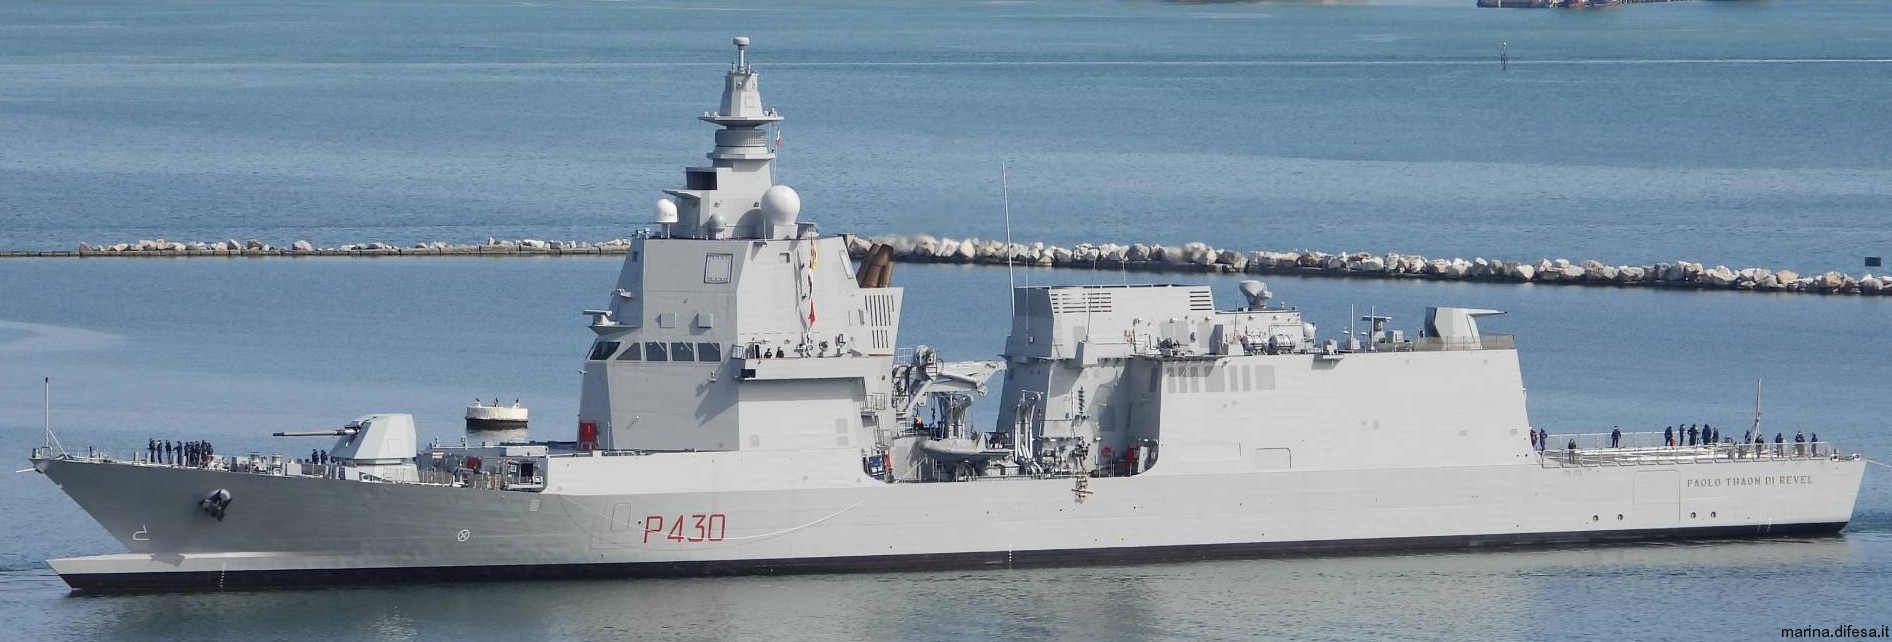 p-430 paolo thaon di revel its nave offshore patrol vessel opv ppa italian navy marina militare 21